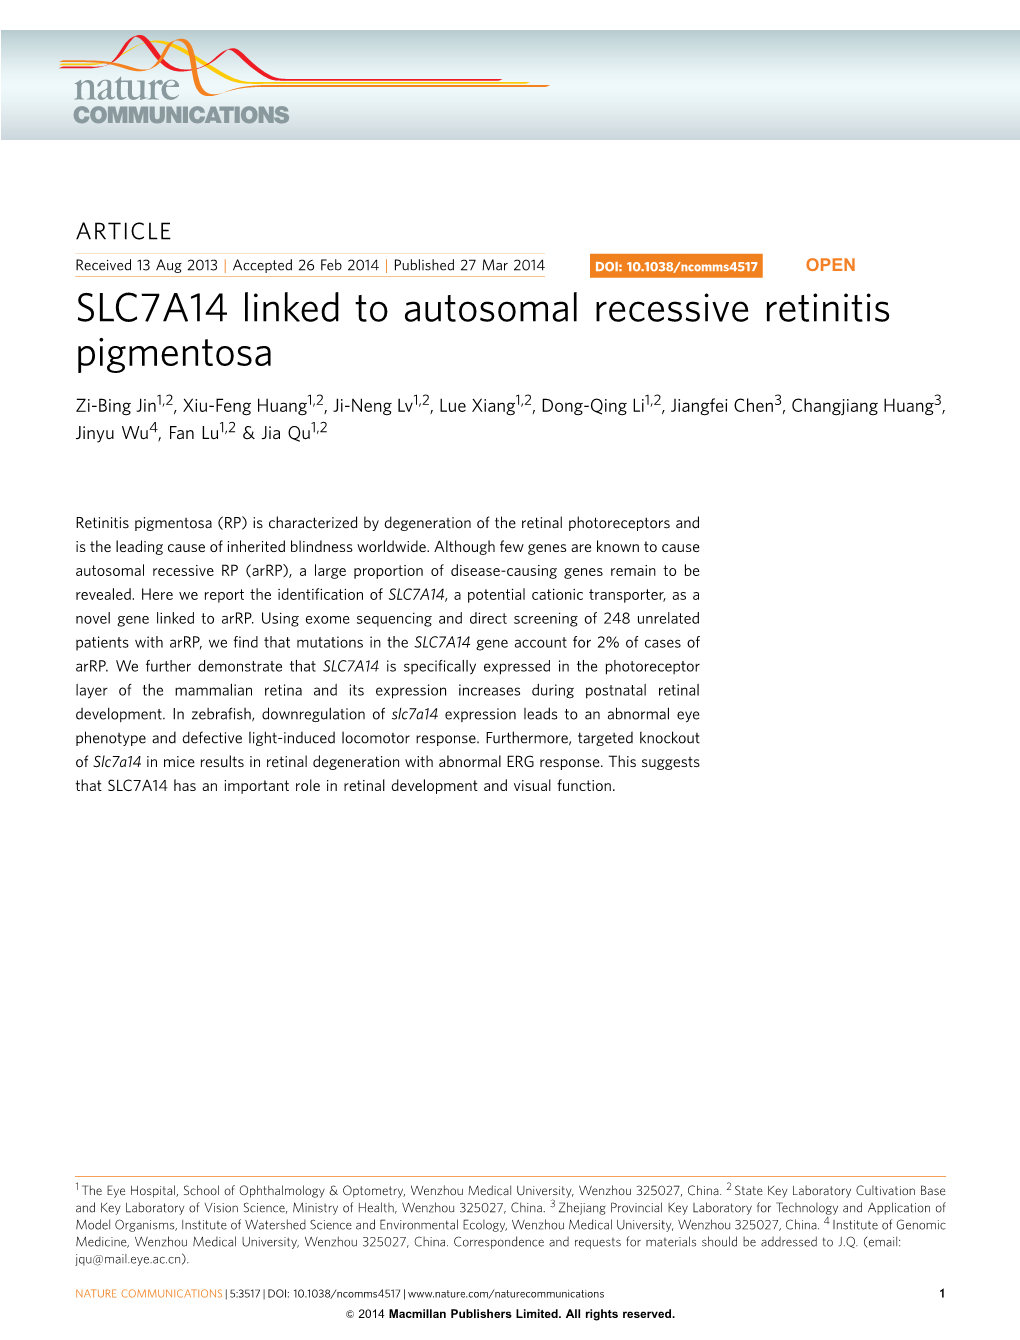 SLC7A14 Linked to Autosomal Recessive Retinitis Pigmentosa